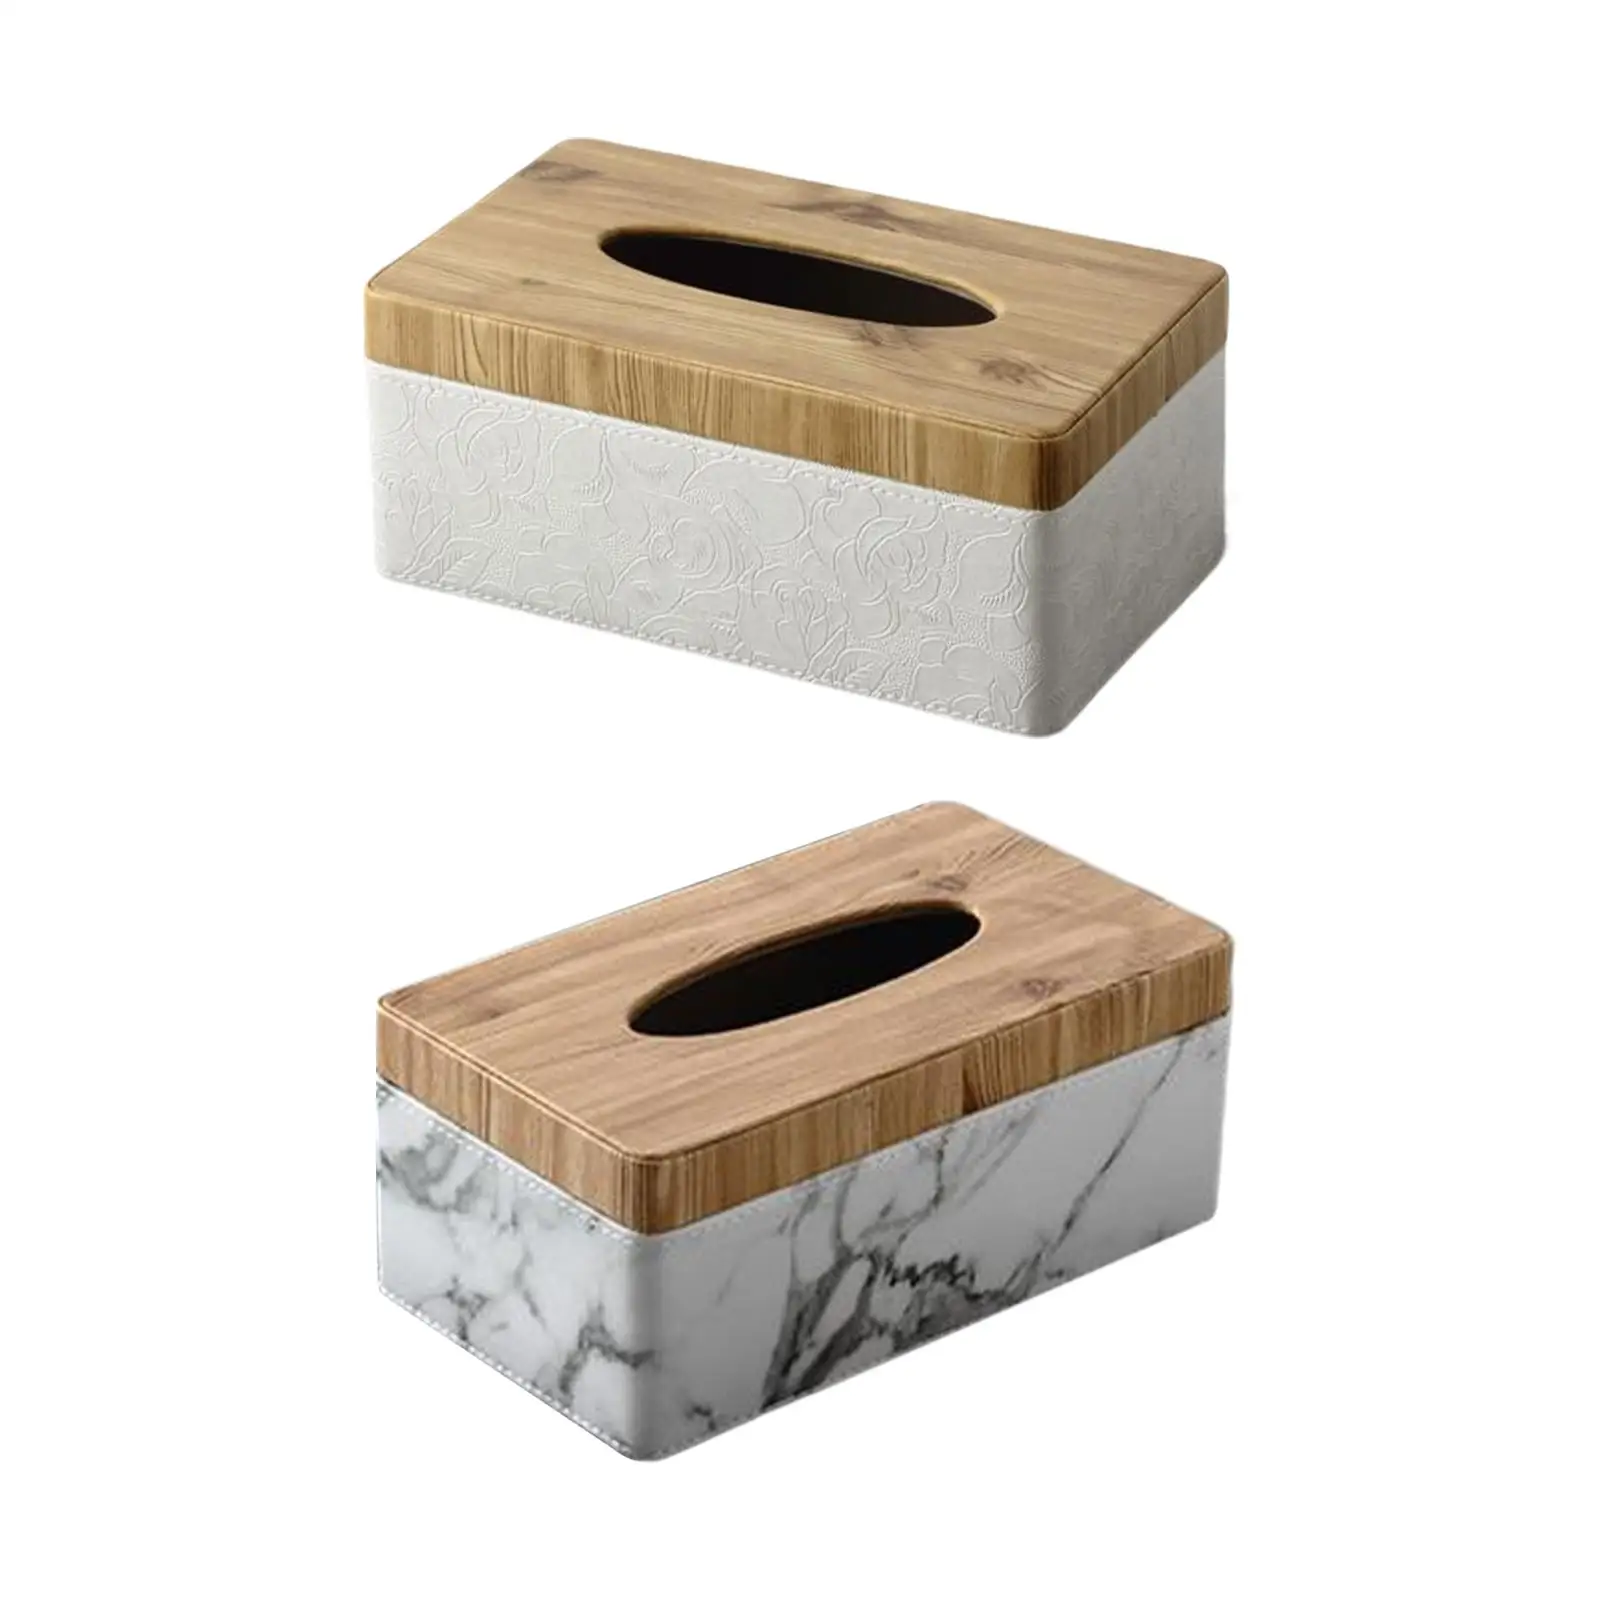 Rectangular Tissue Box Cover Holder Facial Paper Holder Container Napkin Dispenser for Kitchen Desks and Tables Bedroom